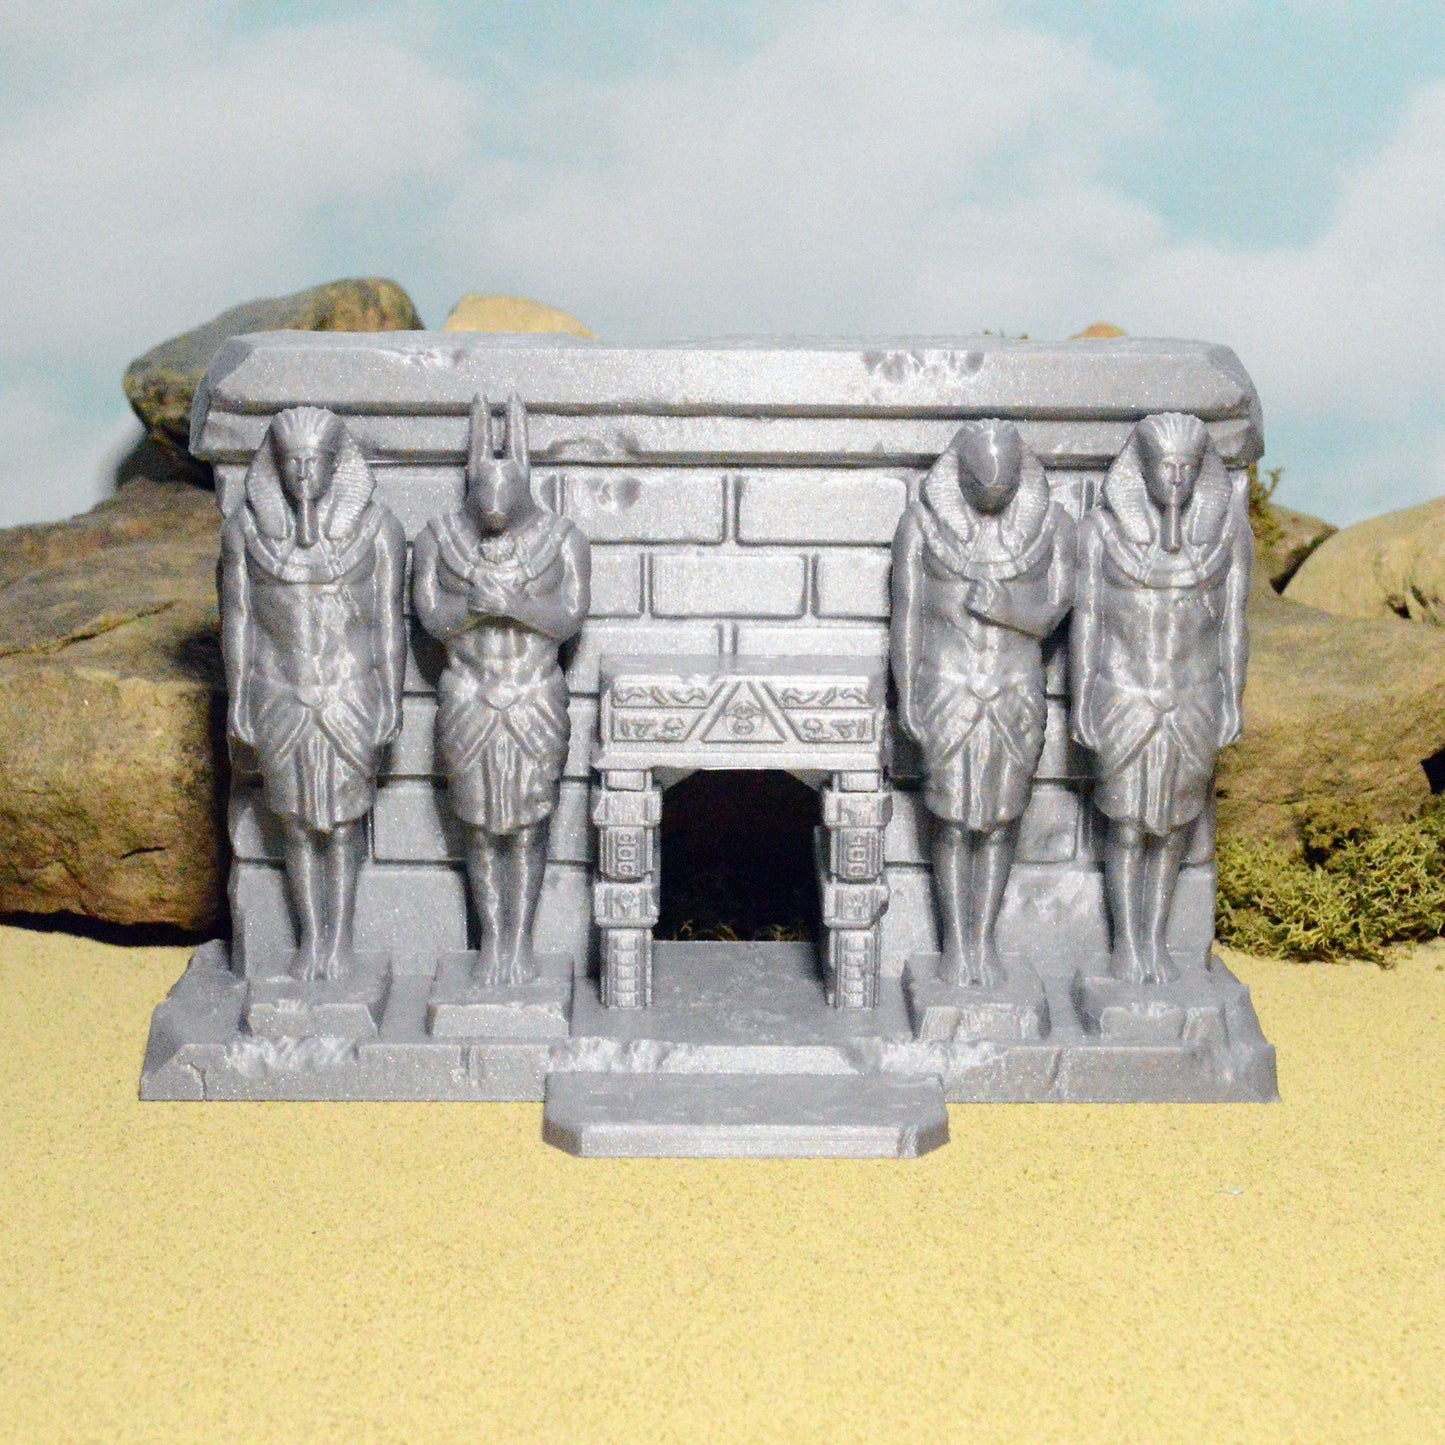 Desert Temple Facade 15mm 28mm for D&D DnD Pathfinder Terrain, Empire of Scorching Sands, Egyptian Statues